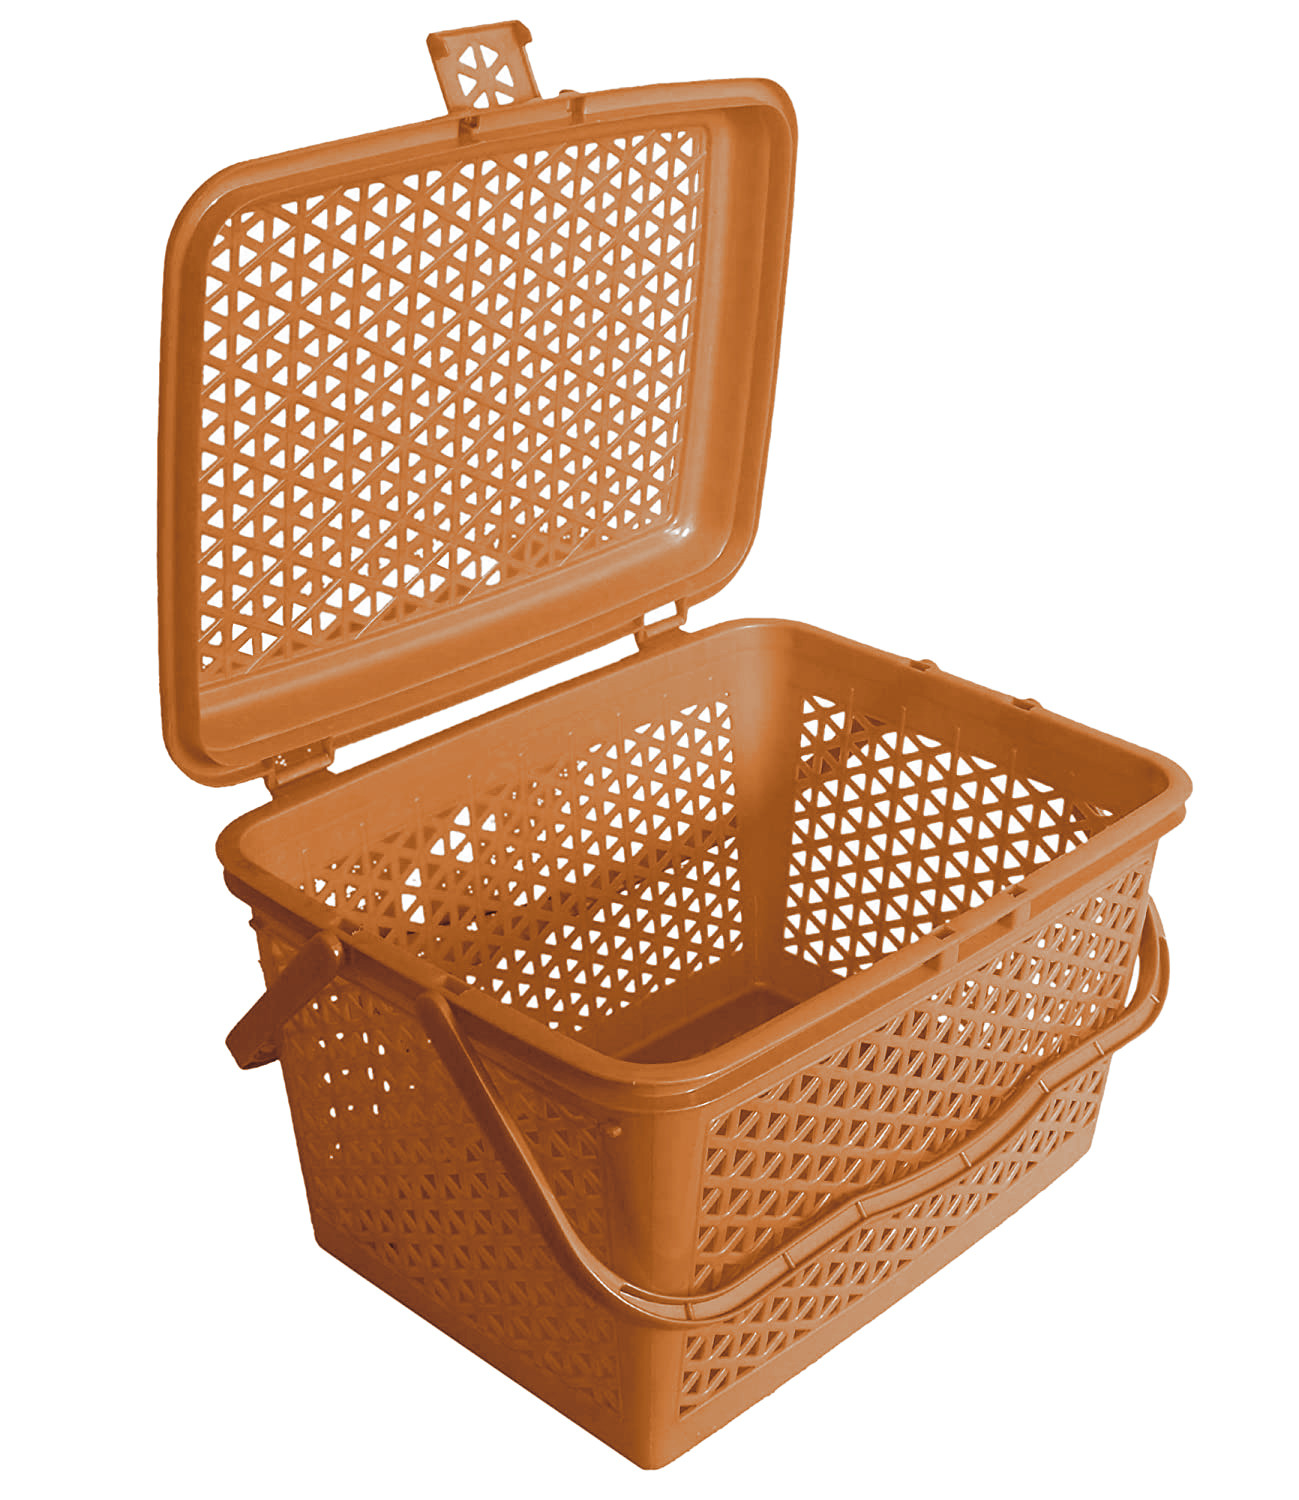 Kuber Industries Plastic Multipurpose Trendy Shopping Small Basket with Lid (Light Brown)-HS_38_KUBMART21151